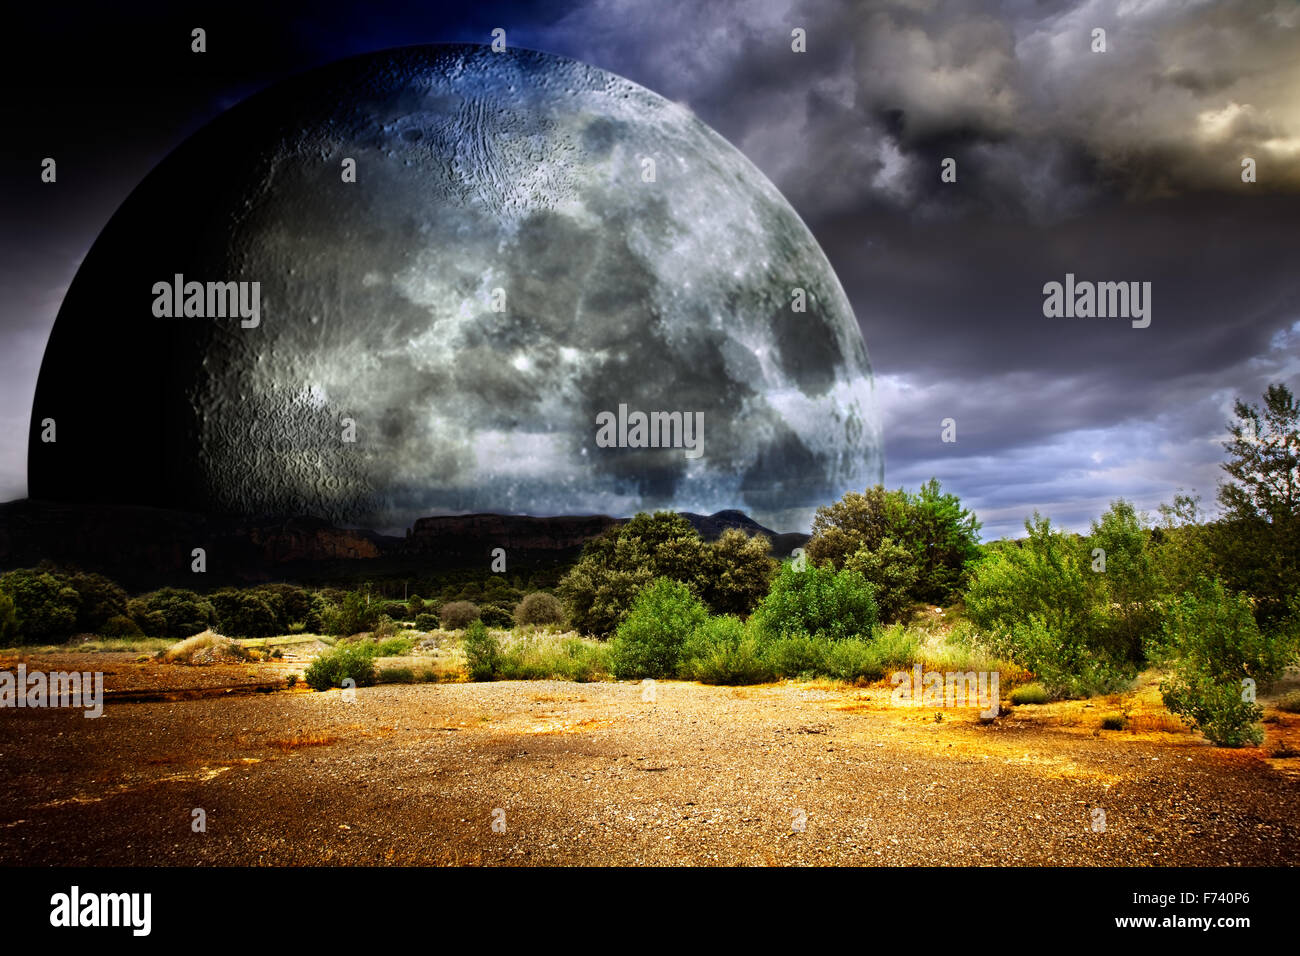 Dream scape con luna llena y naturaleza Foto de stock